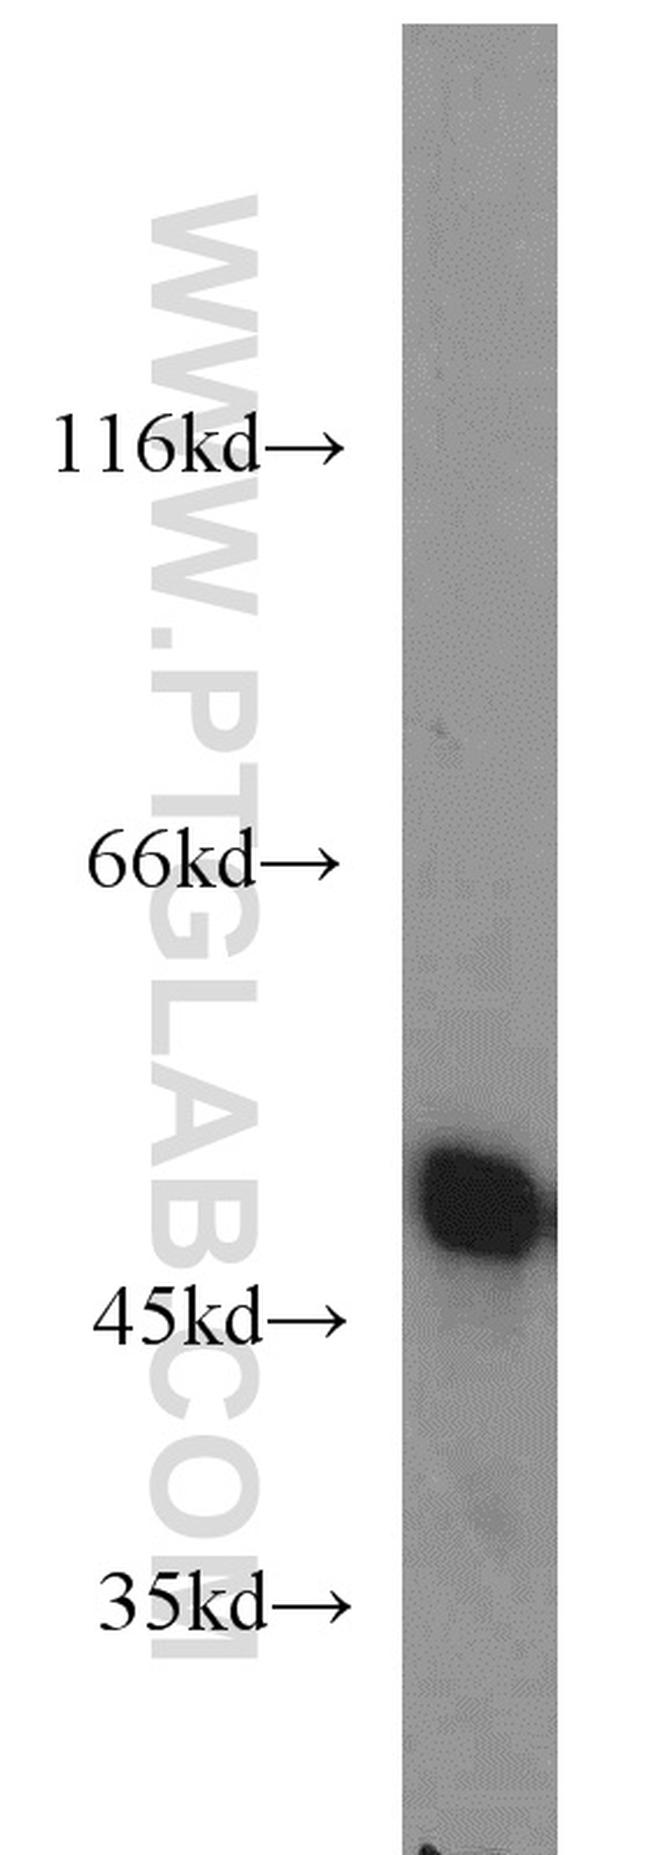 ENO1 Antibody in Western Blot (WB)